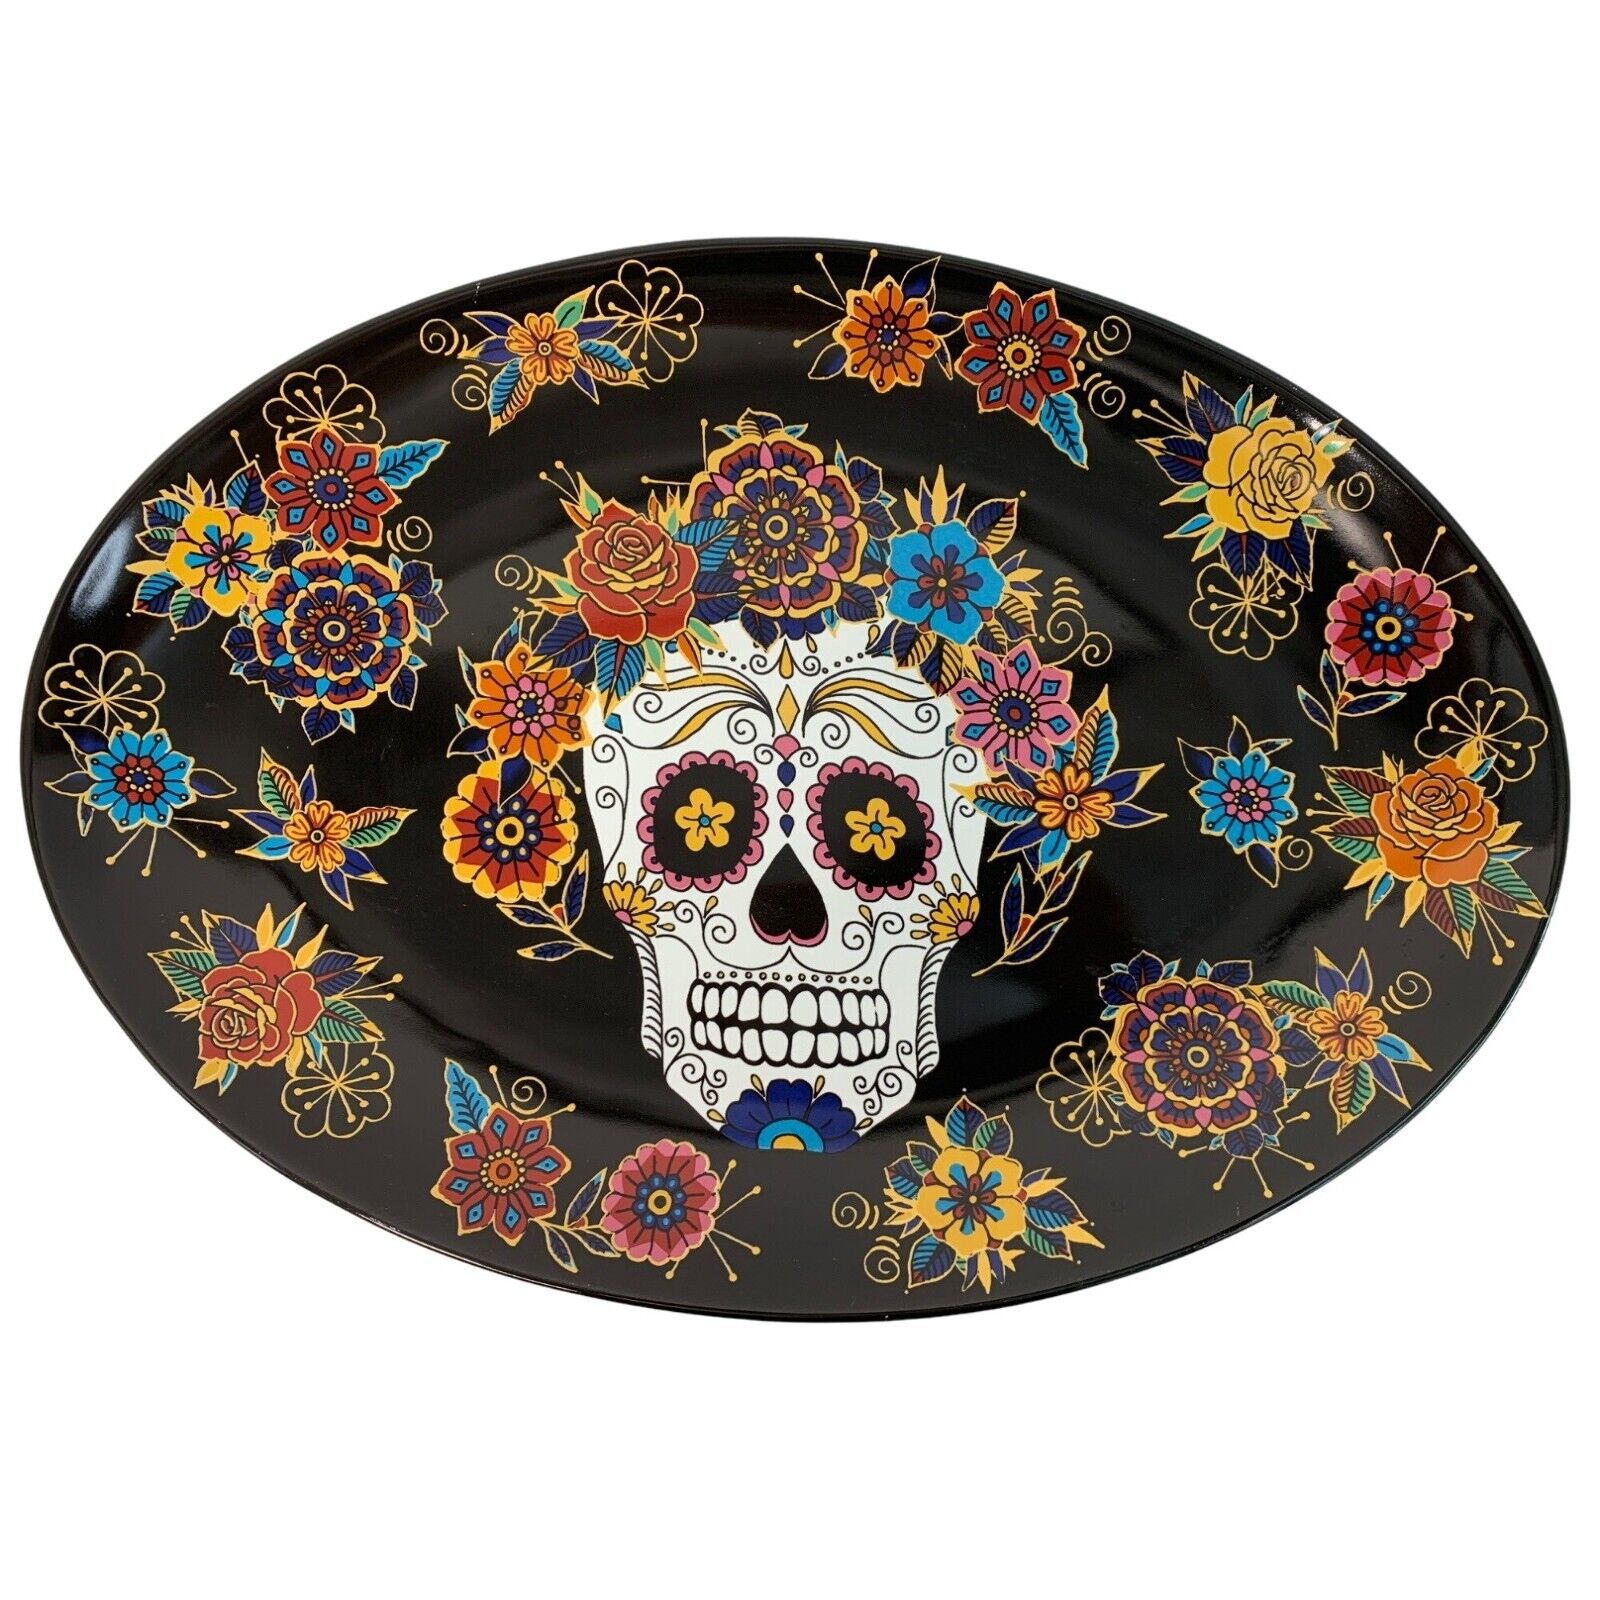 William Sonoma Day Of The Dead Ceramic Platter Floral Skull Halloween 7331 EUC